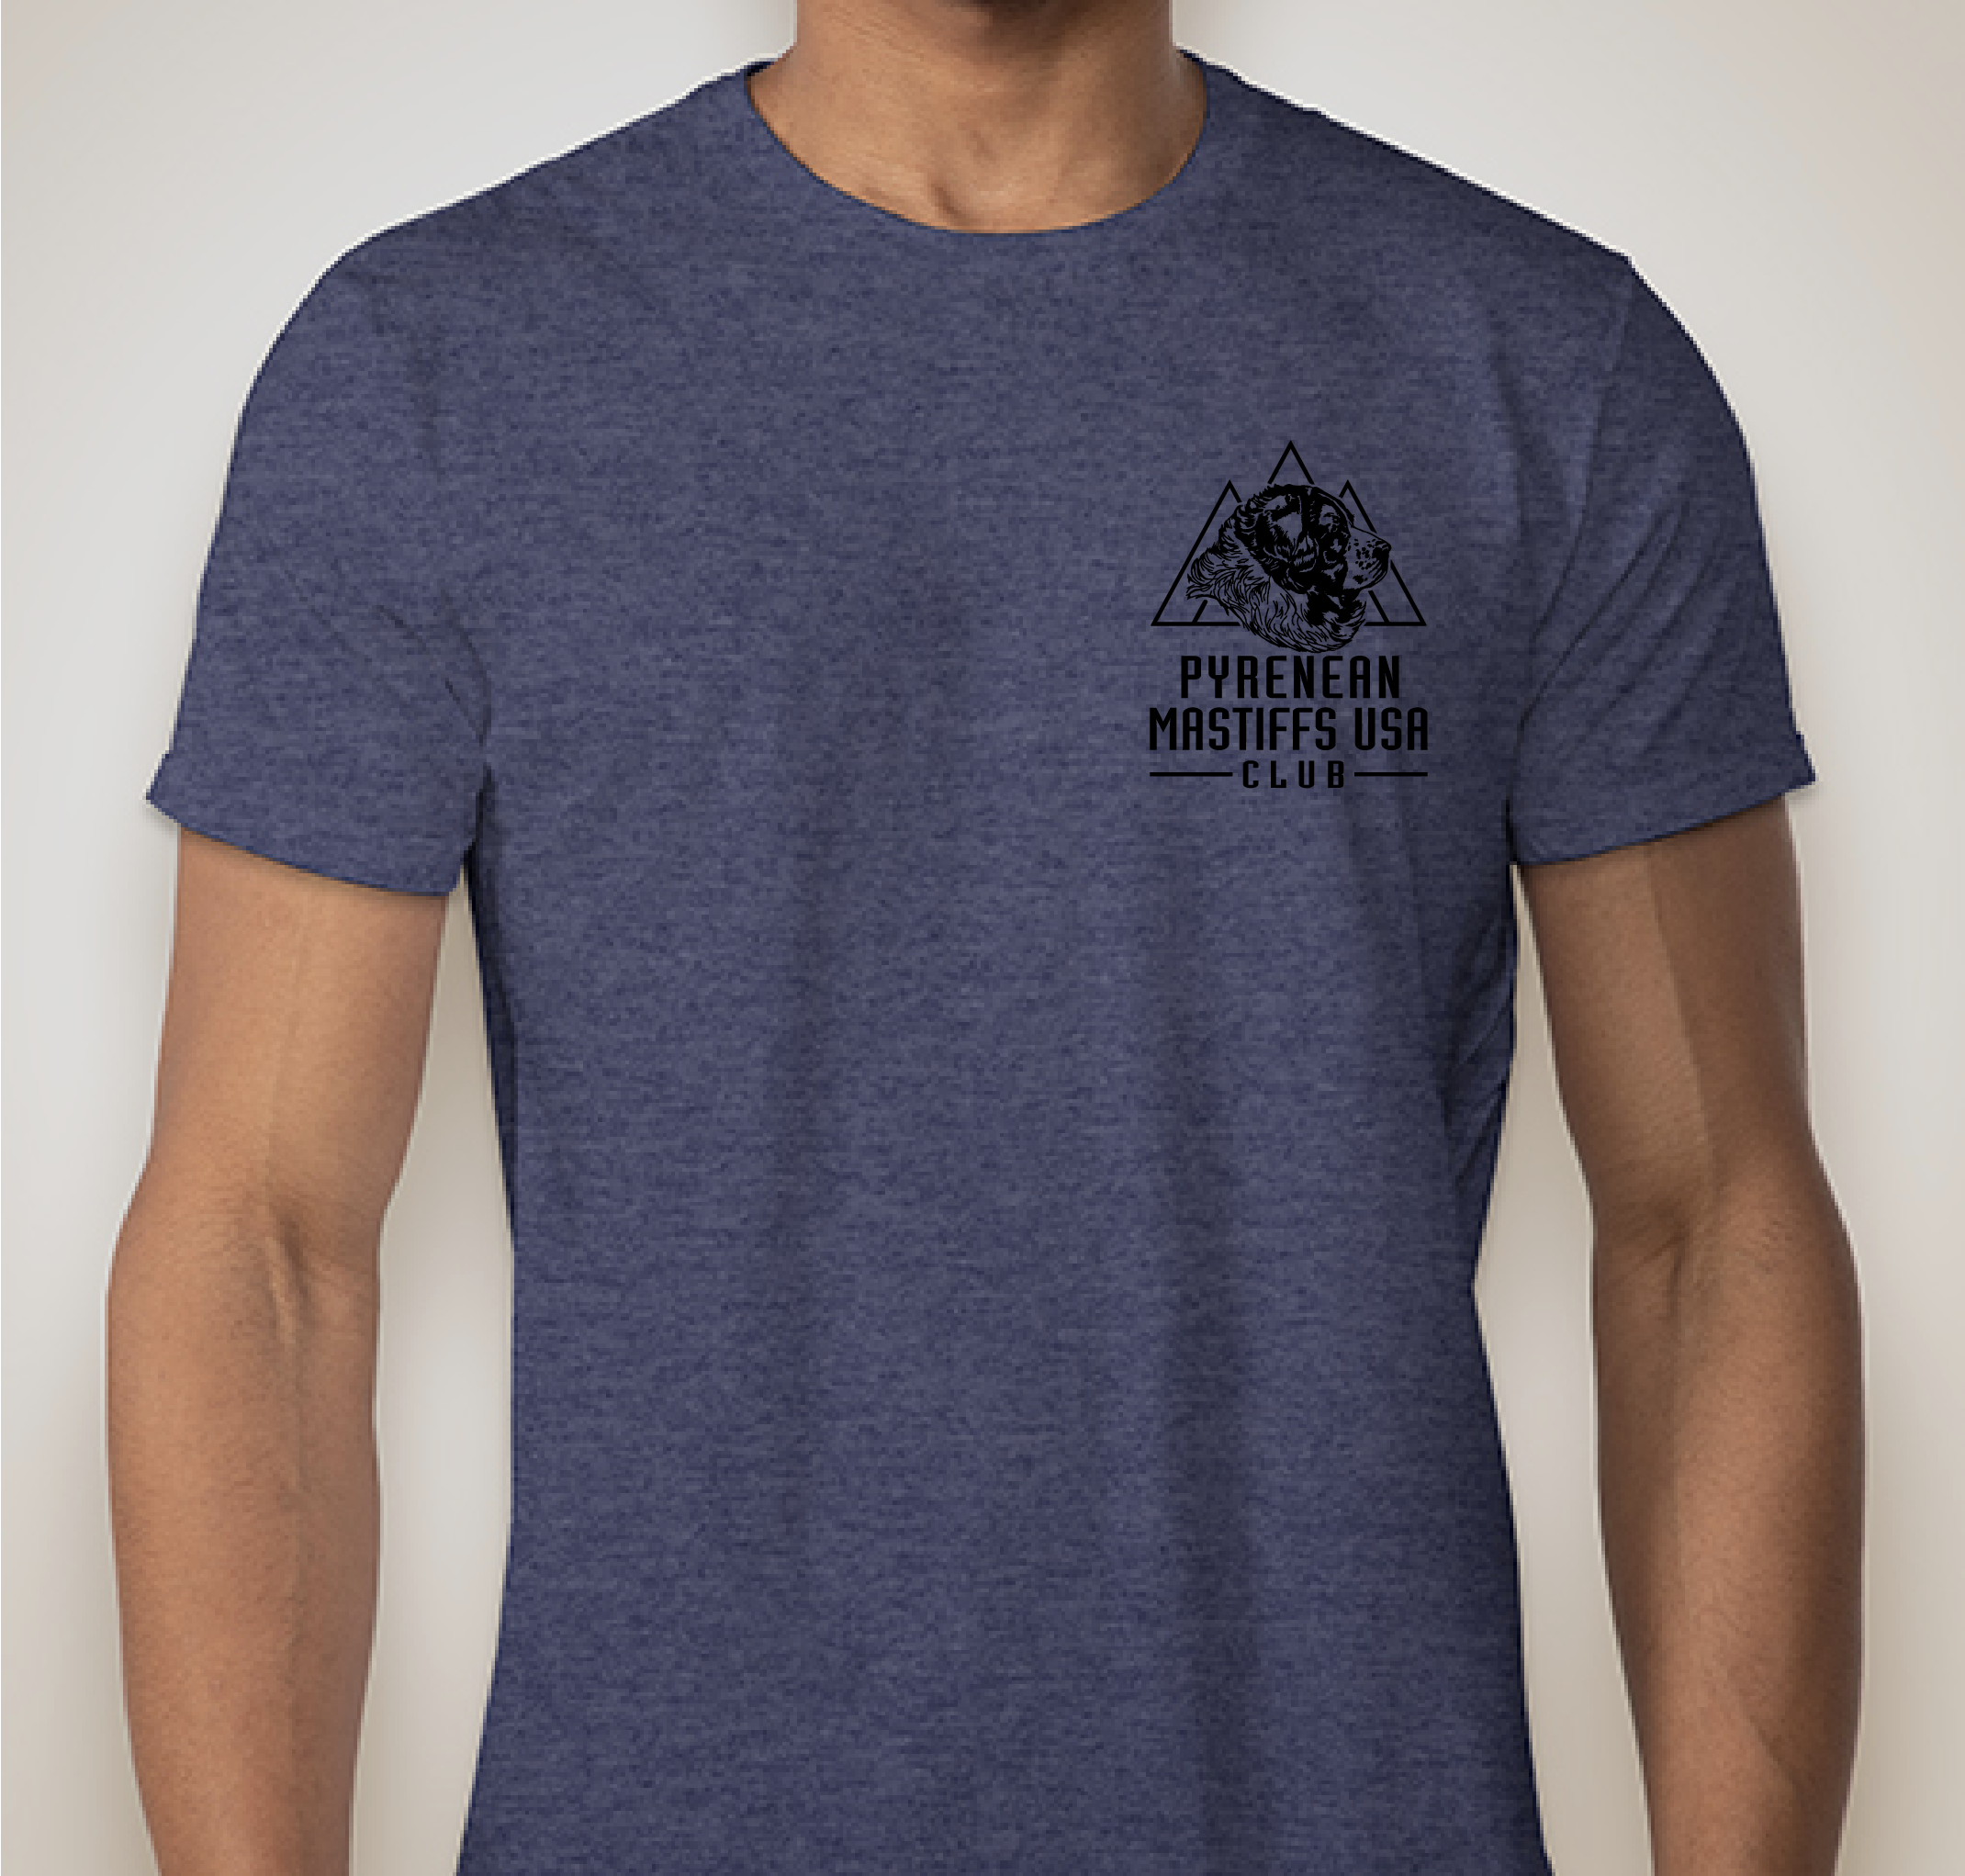 Pyrenean Mastiff USA Fundraiser - unisex shirt design - front